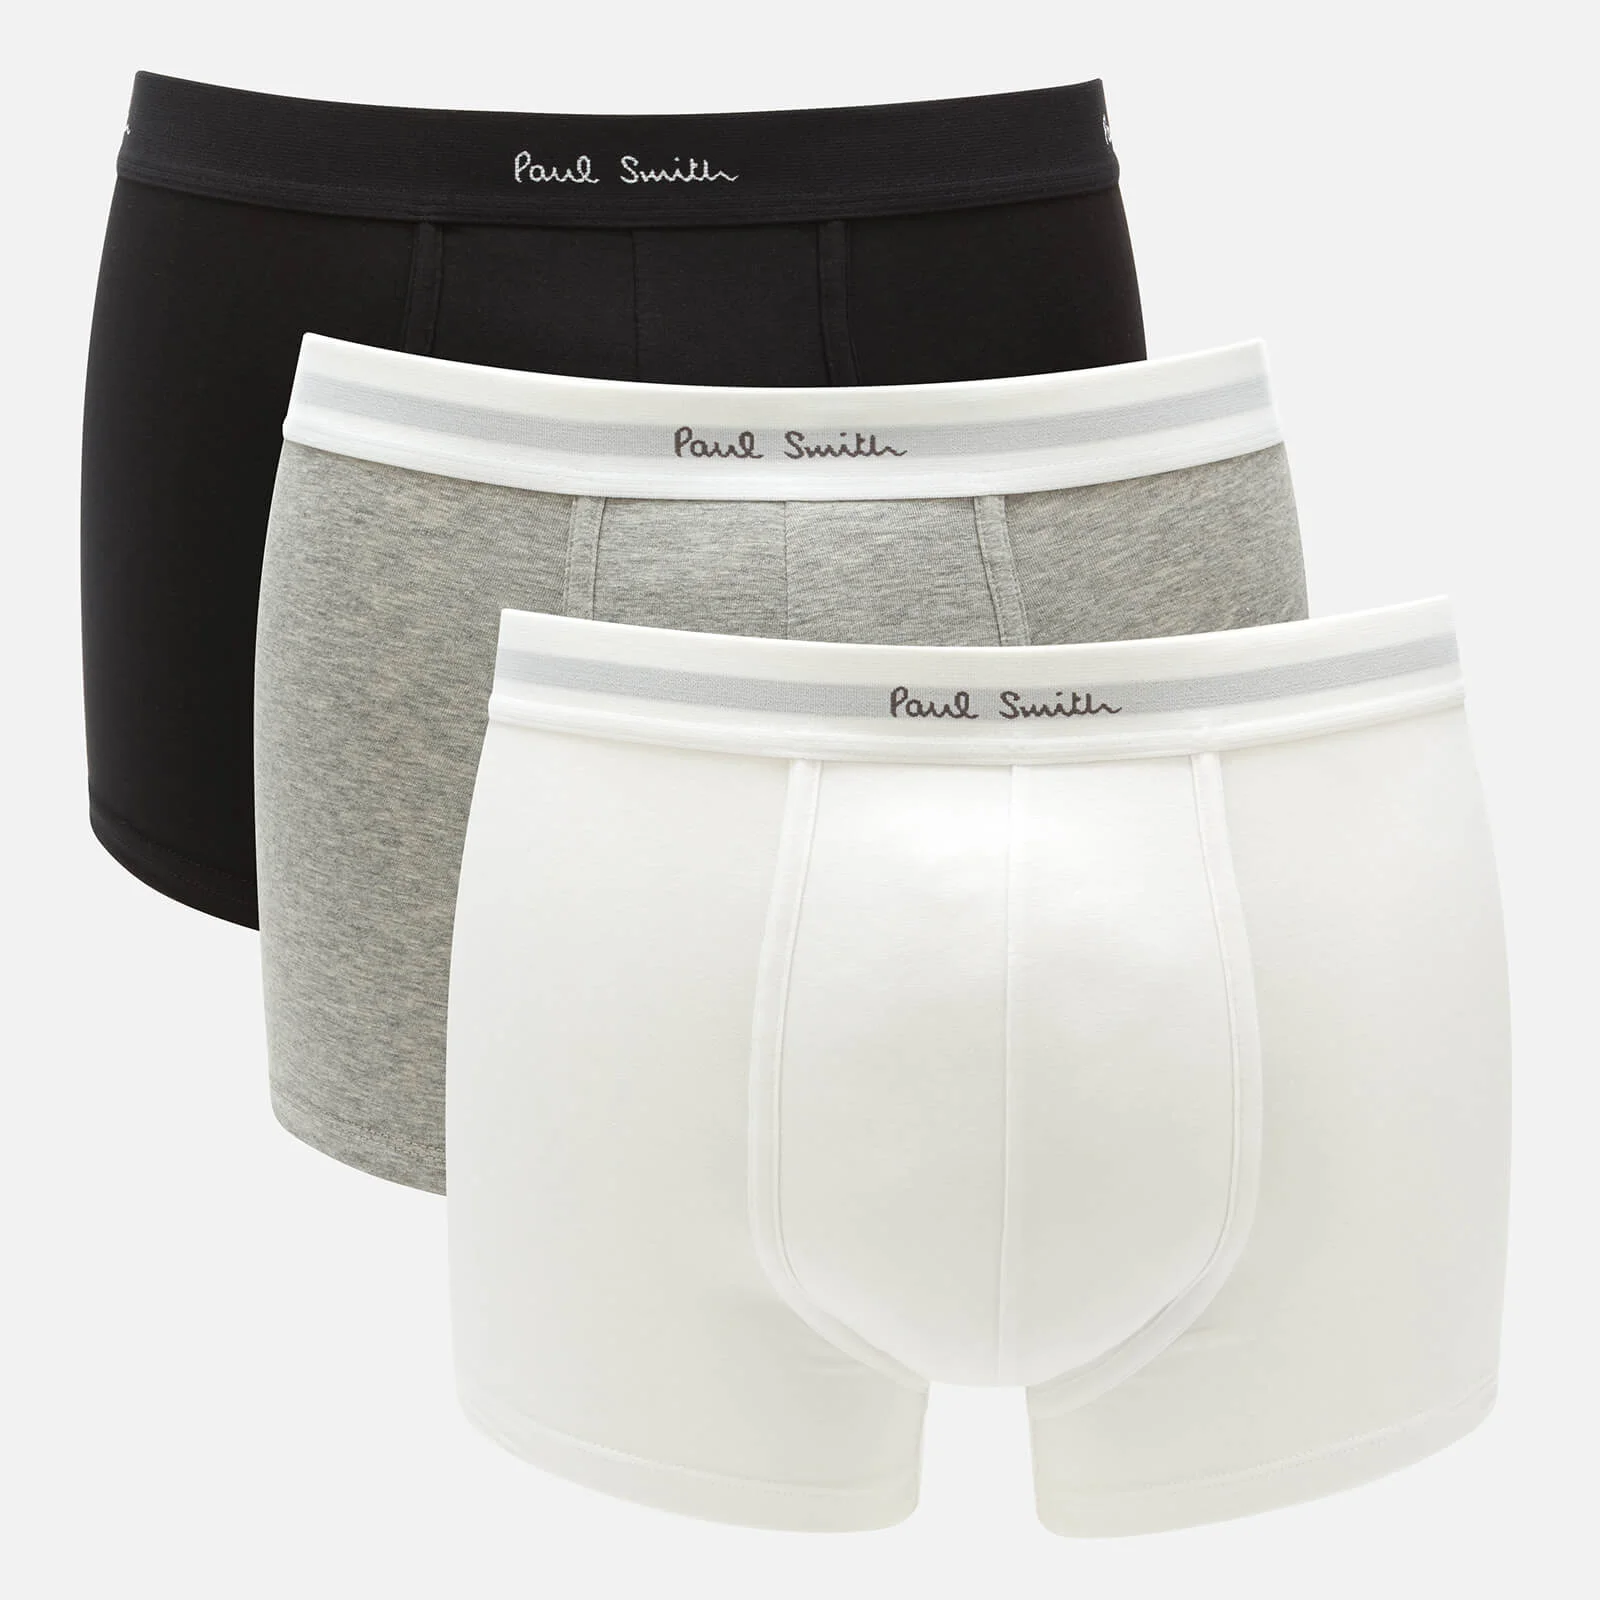 PS Paul Smith Men's 3-Pack Trunk Boxer Shorts - White/Grey/Black Image 1